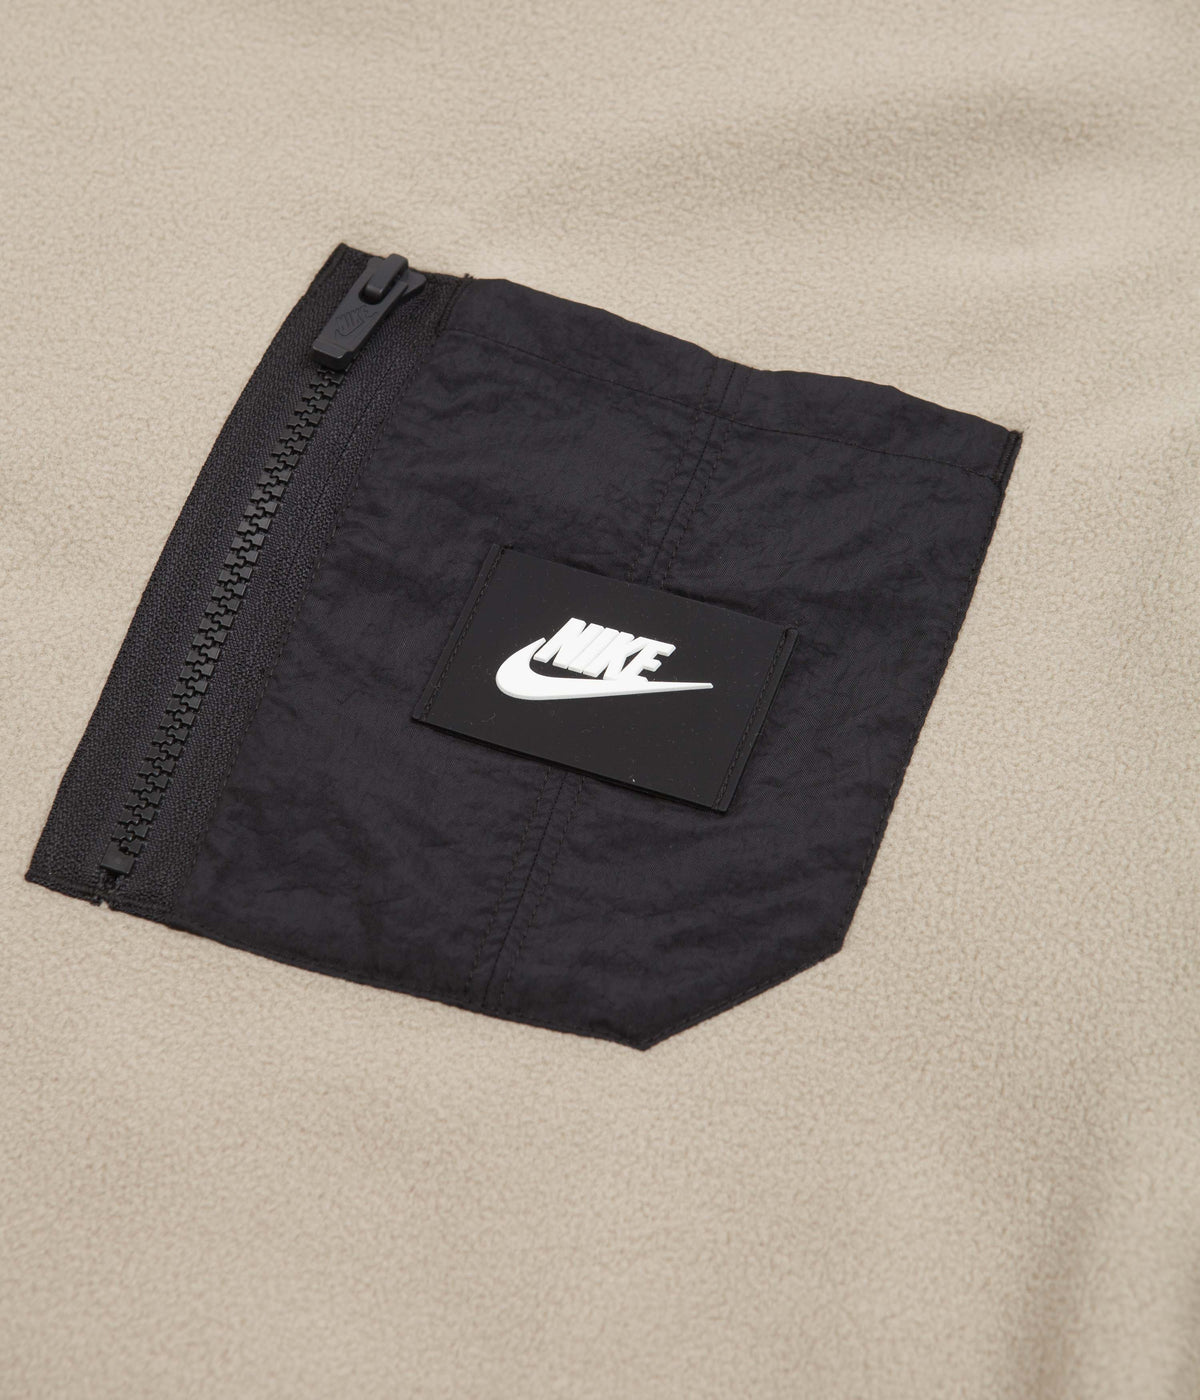 Nike Therma-FIT Fleece Crewneck Sweatshirt - Khaki / Ironstone / Black ...